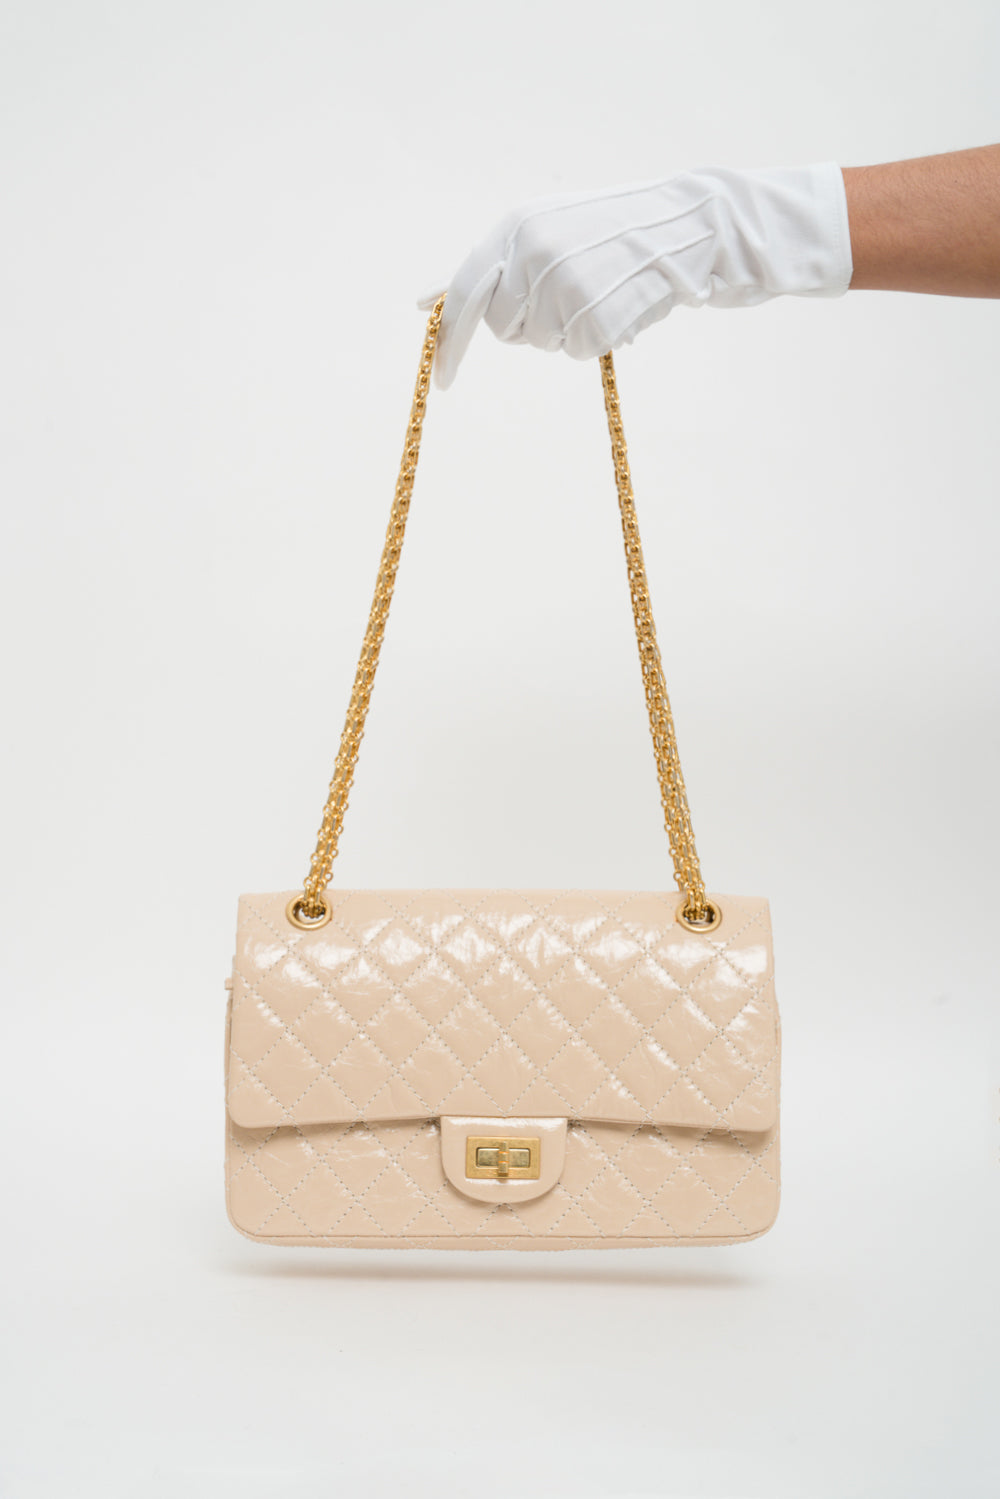 cream chanel handbag